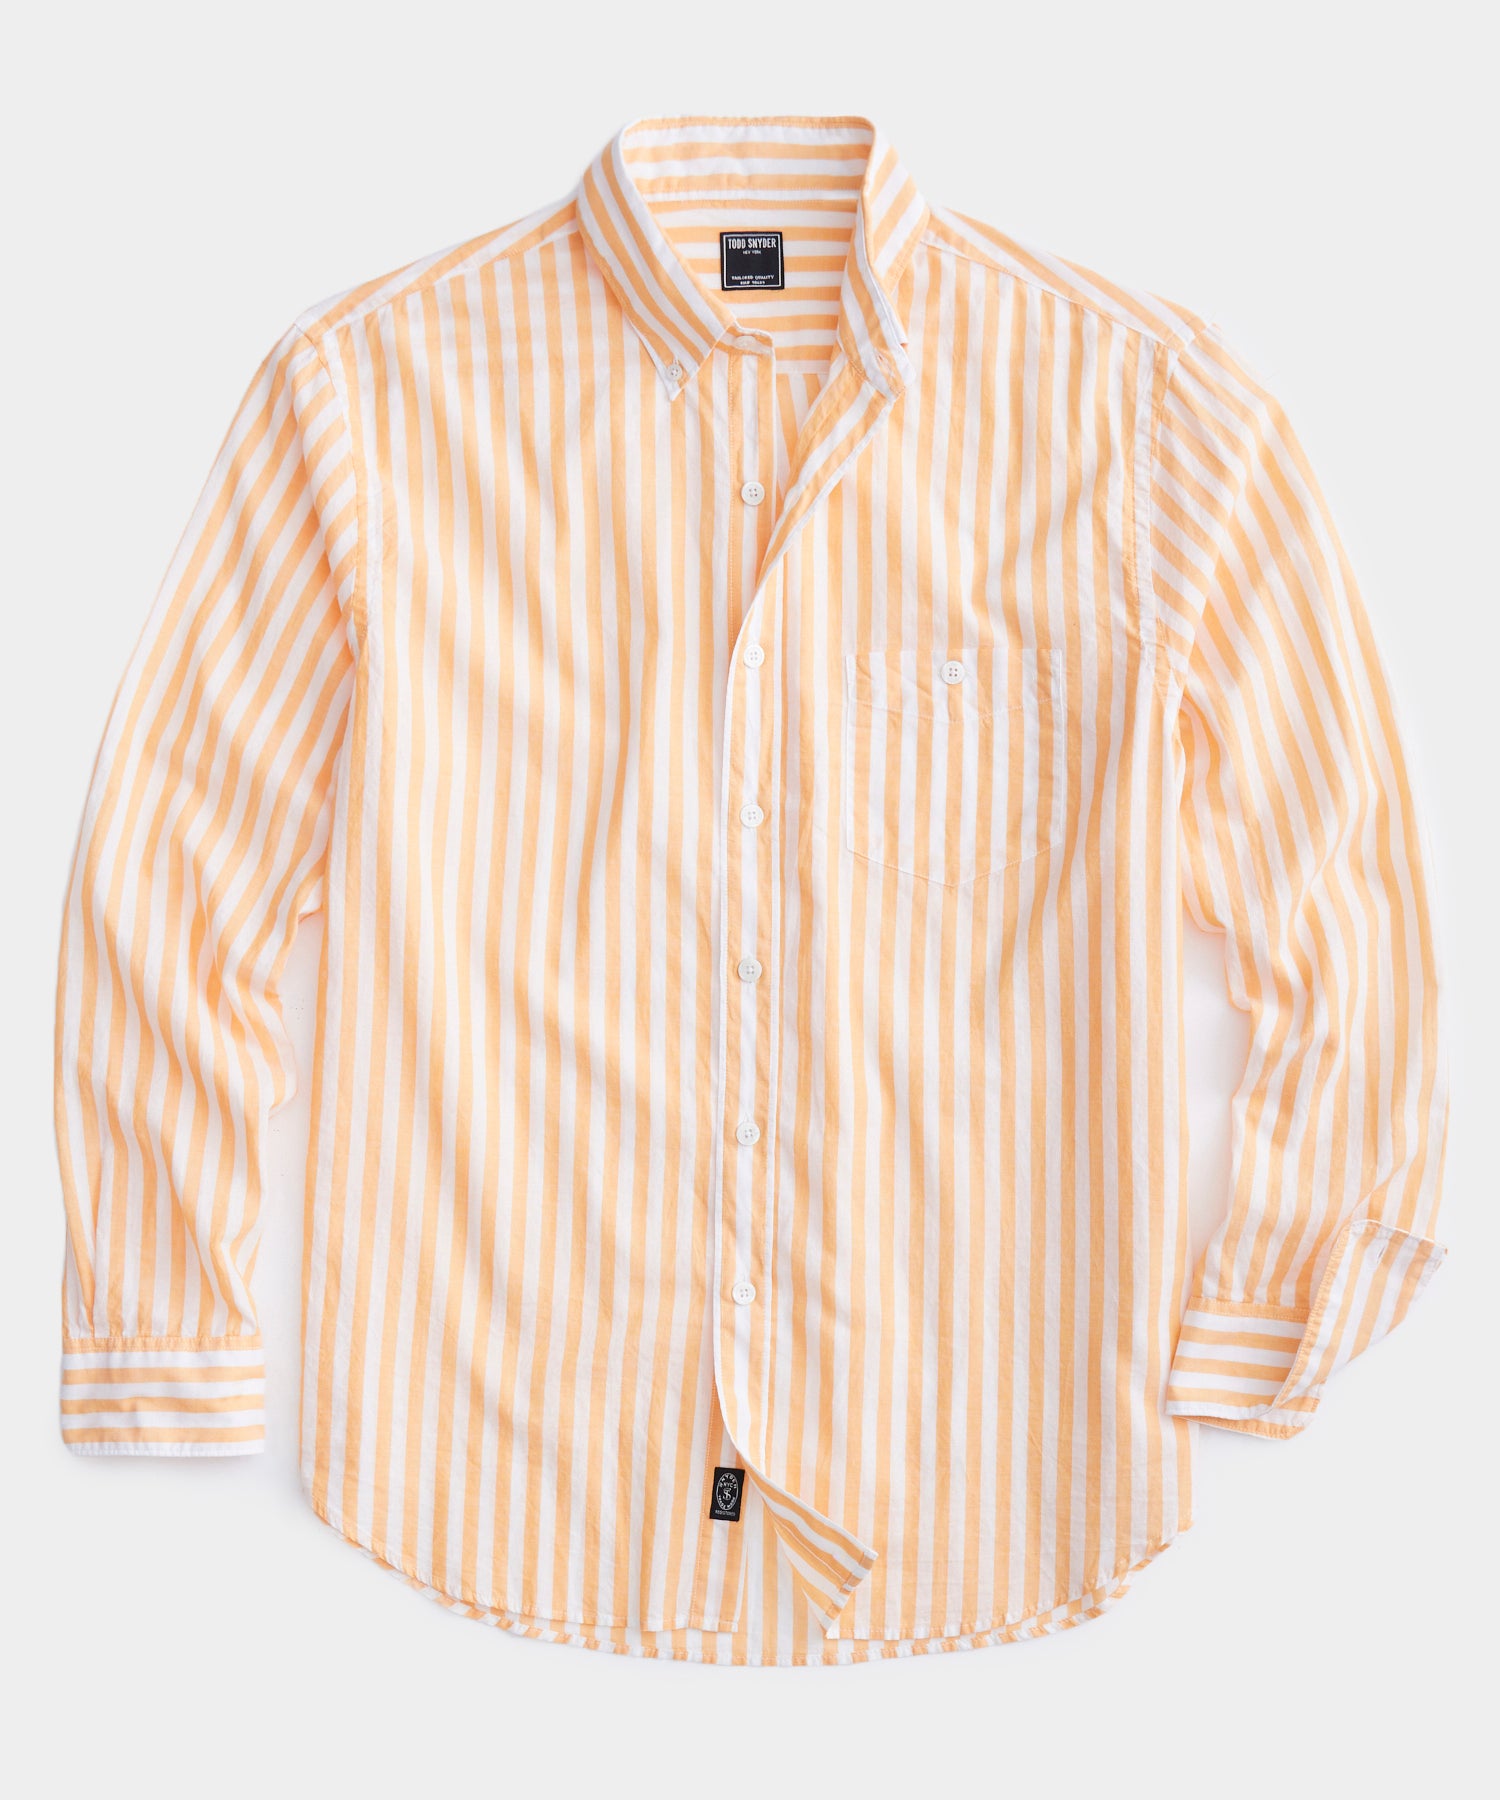 Men's Shirt - Orange - XL